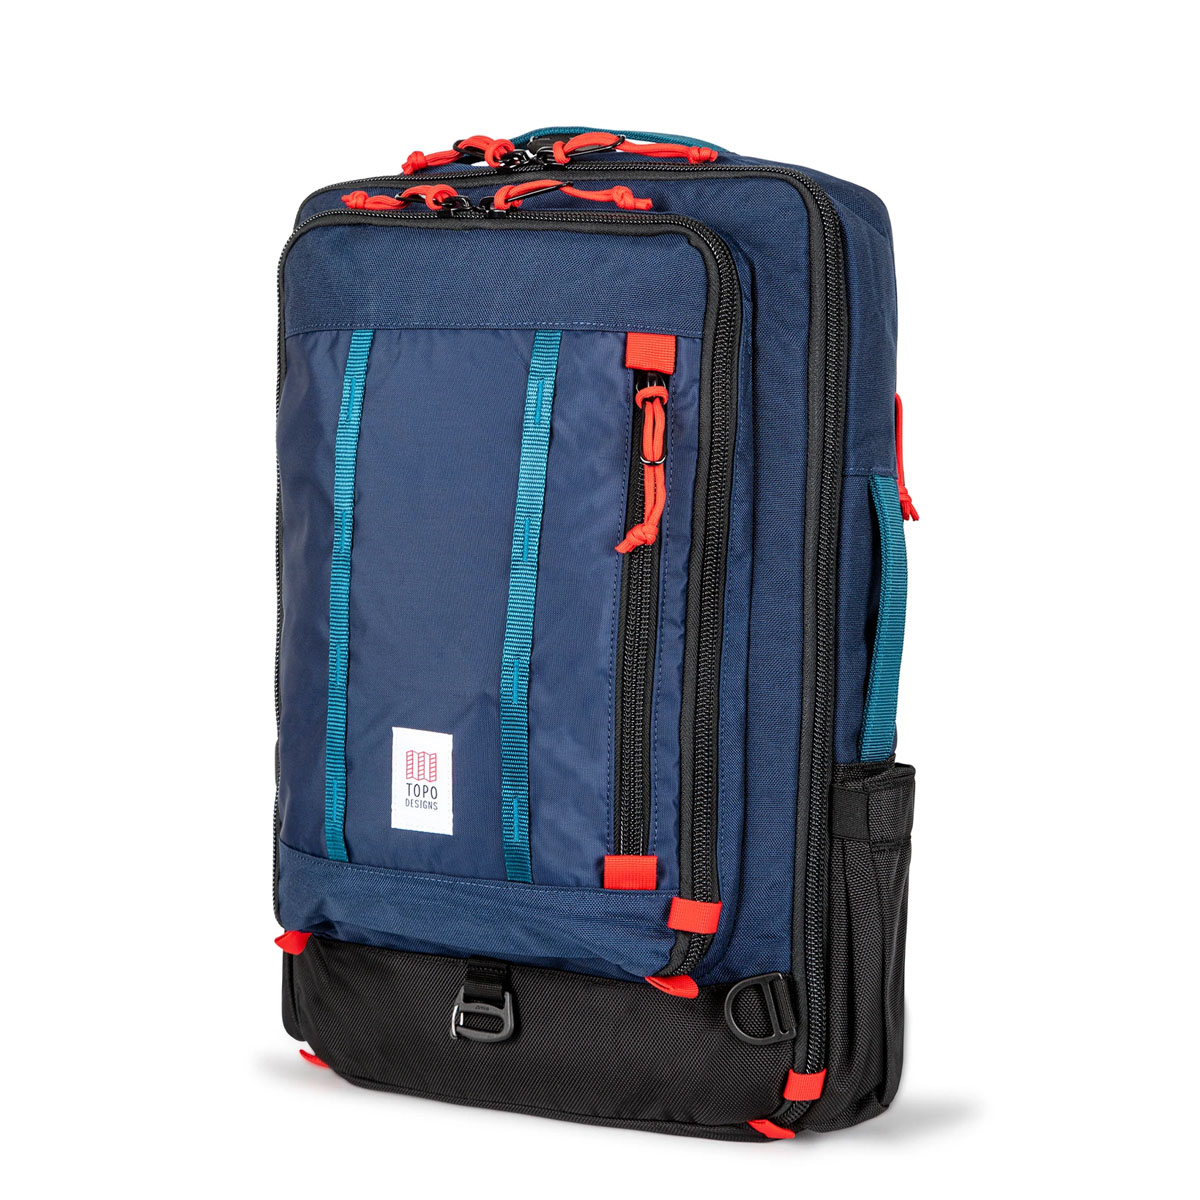 Rugged Duffle bag - Backpacks - 30L - Manera - EN